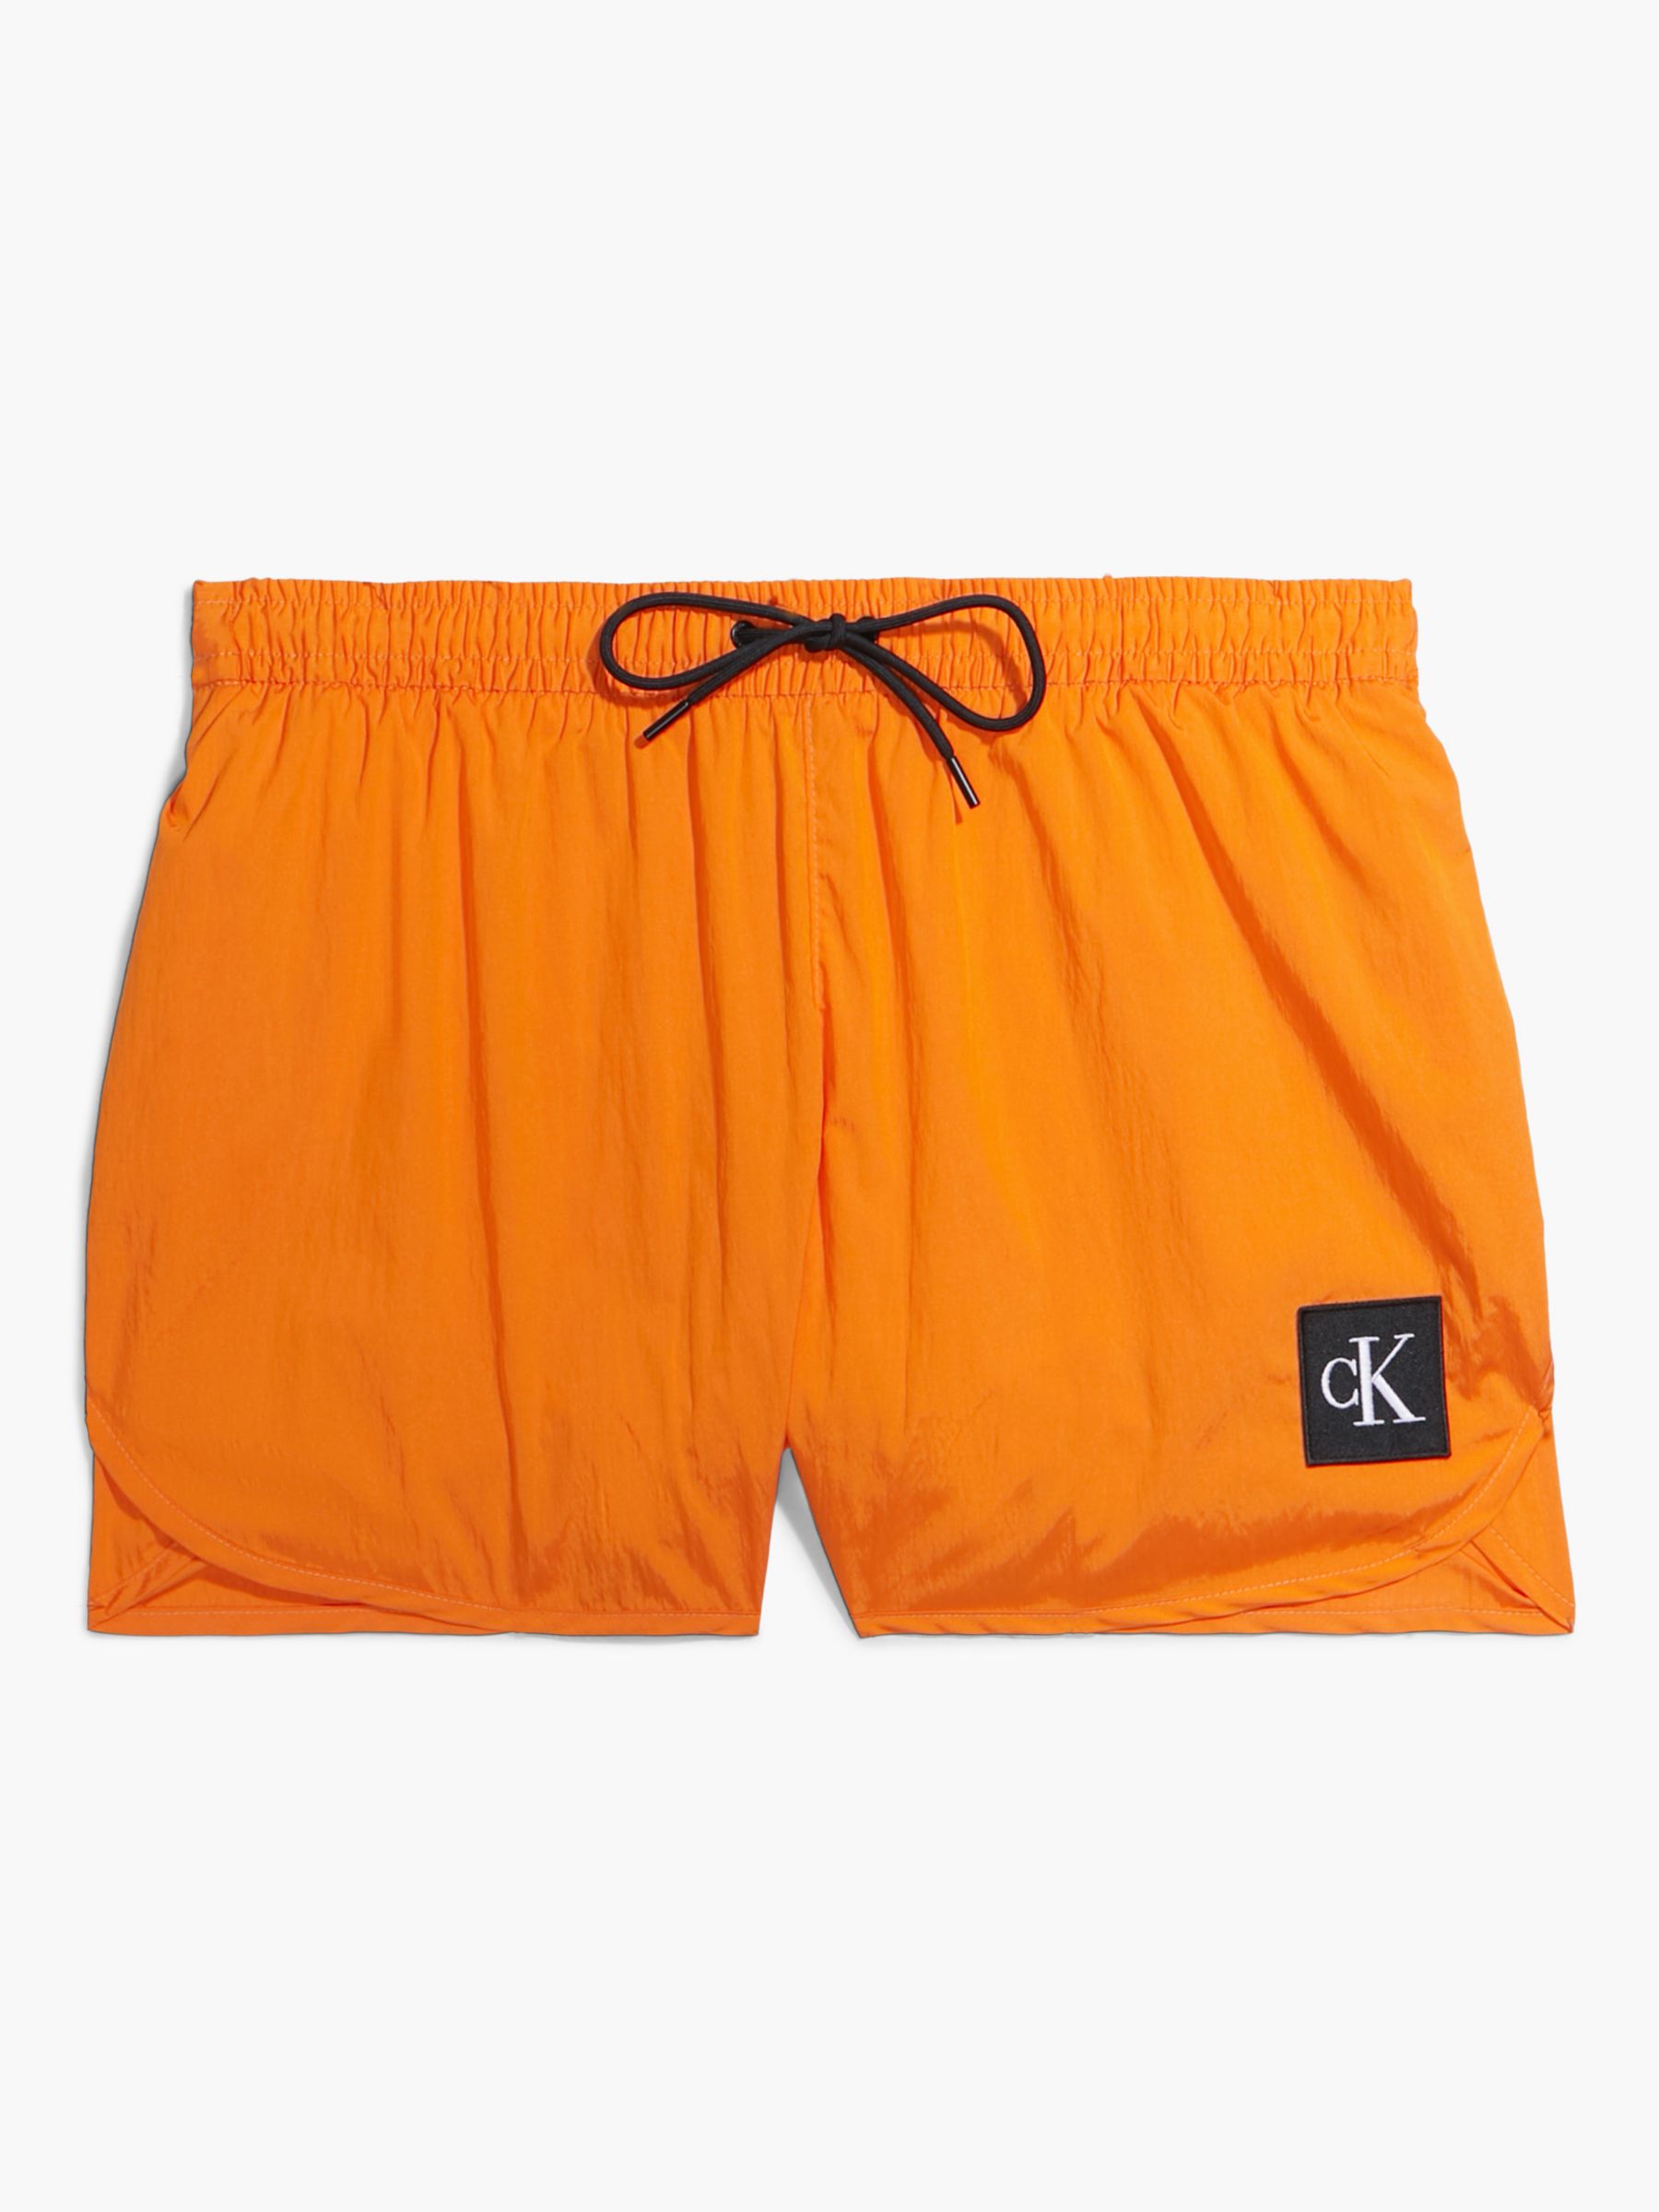 Calvin Klein Runners Swim Shorts, Sun Kissed Orange, M